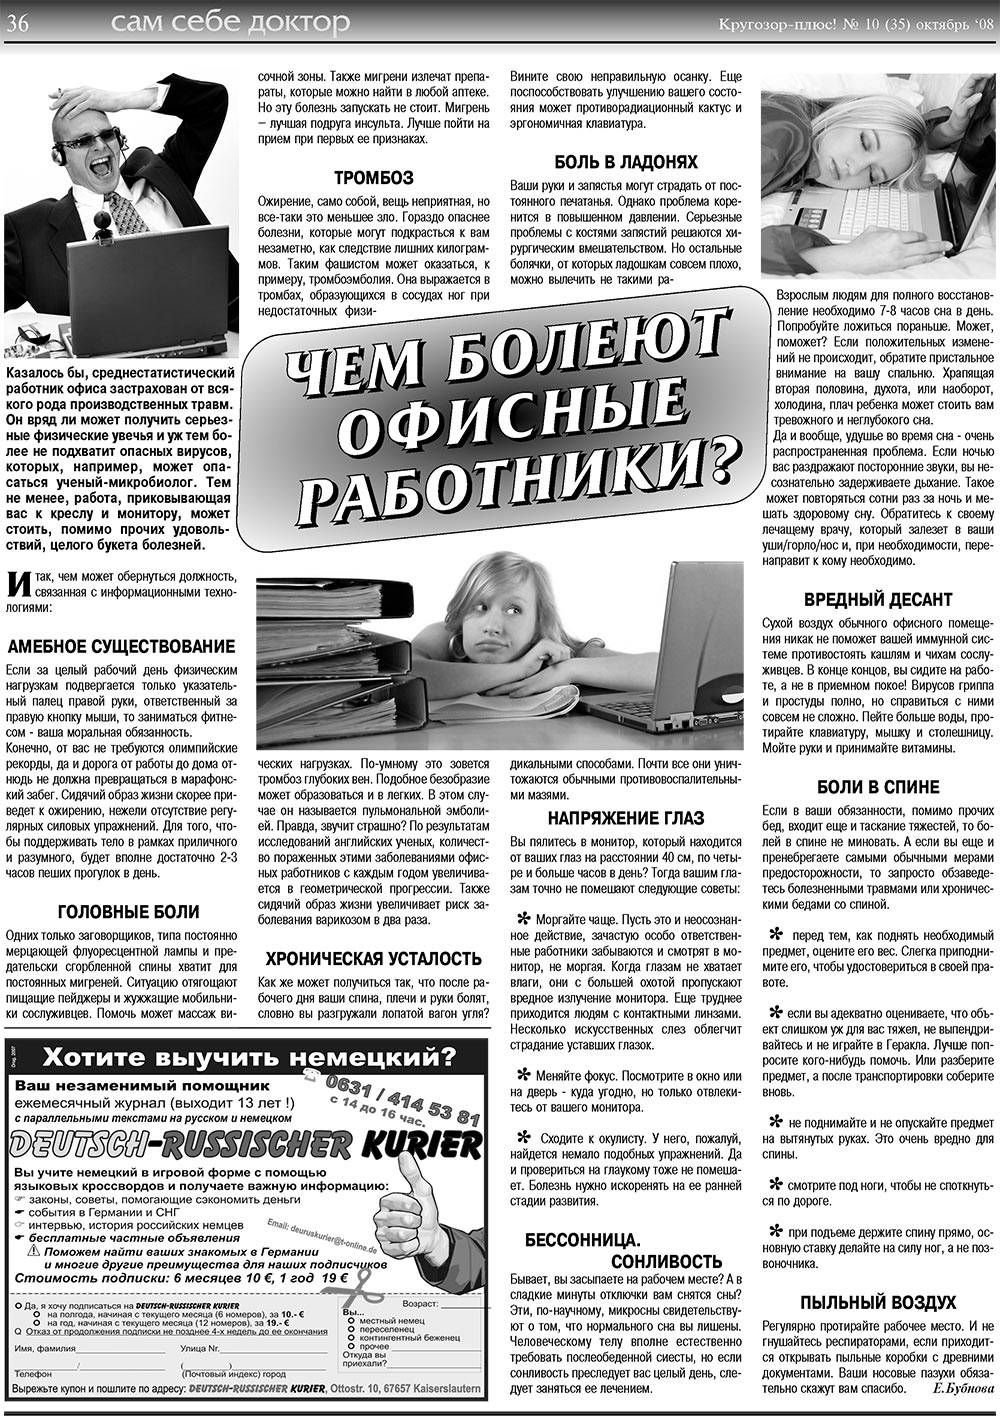 Кругозор плюс! (газета). 2008 год, номер 10, стр. 36